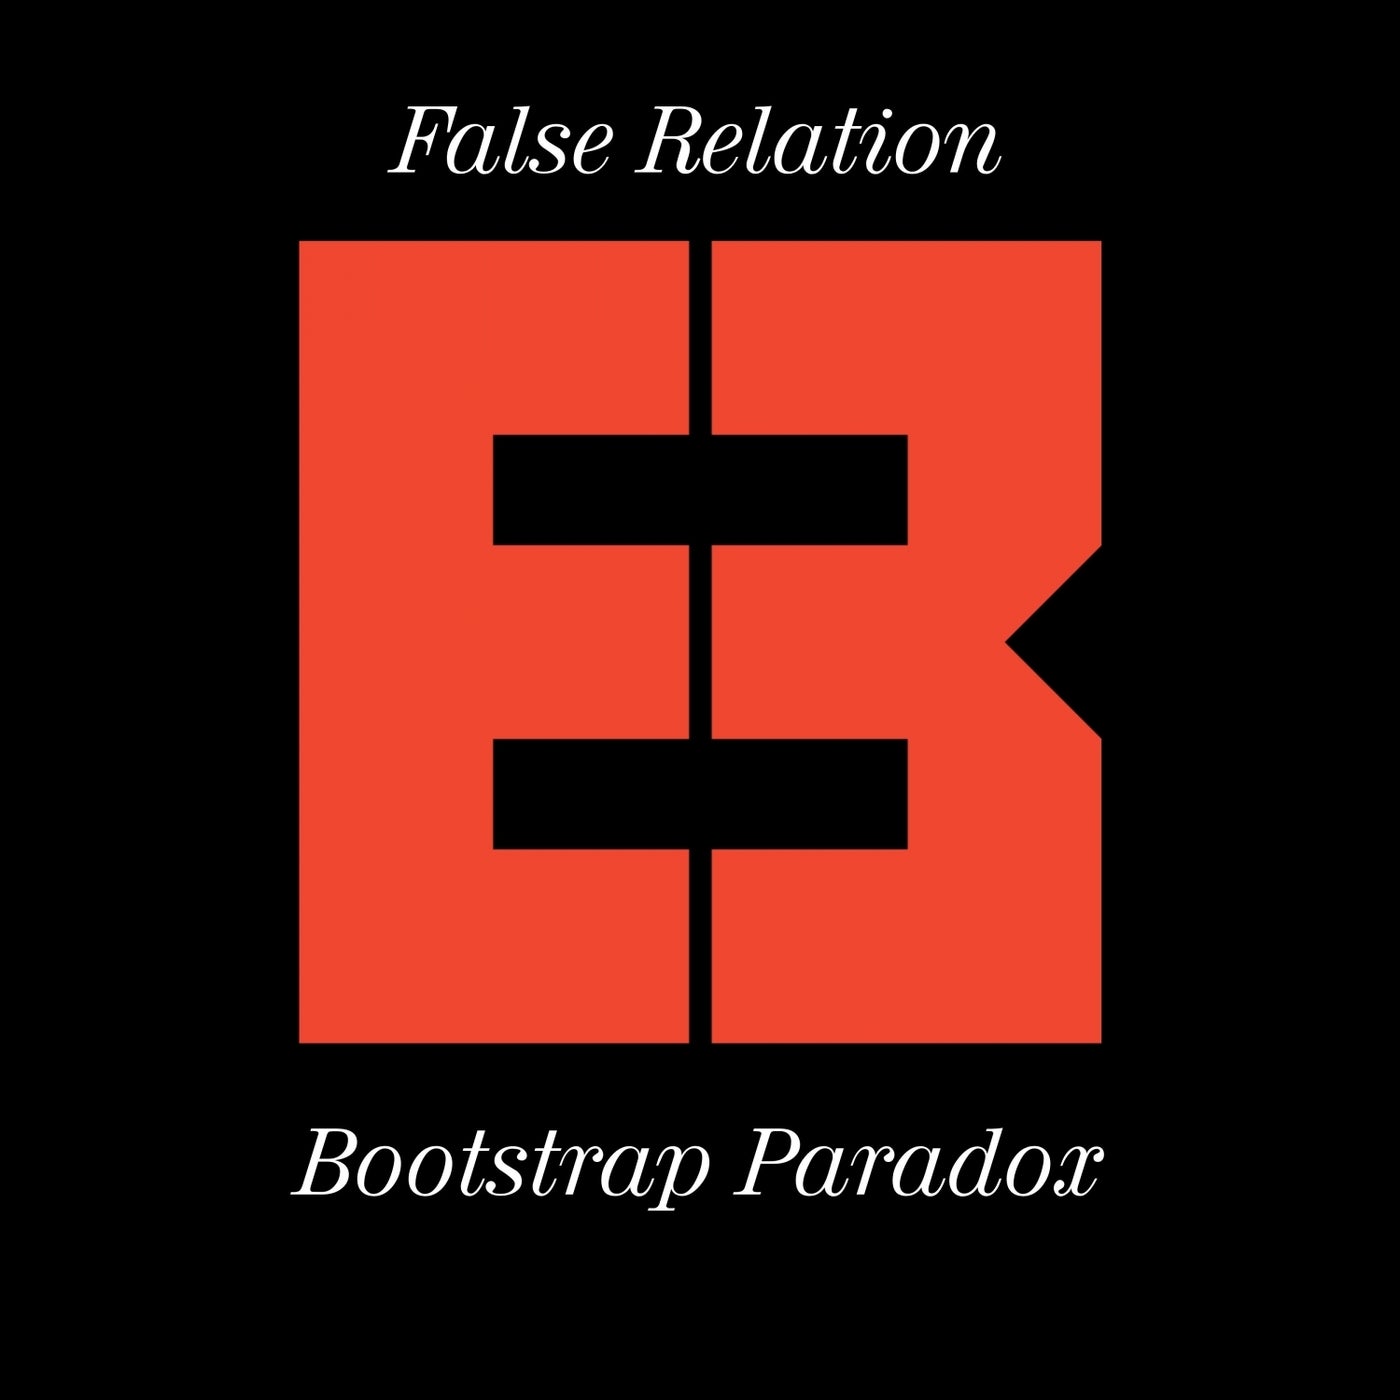 Bootstrap Paradox